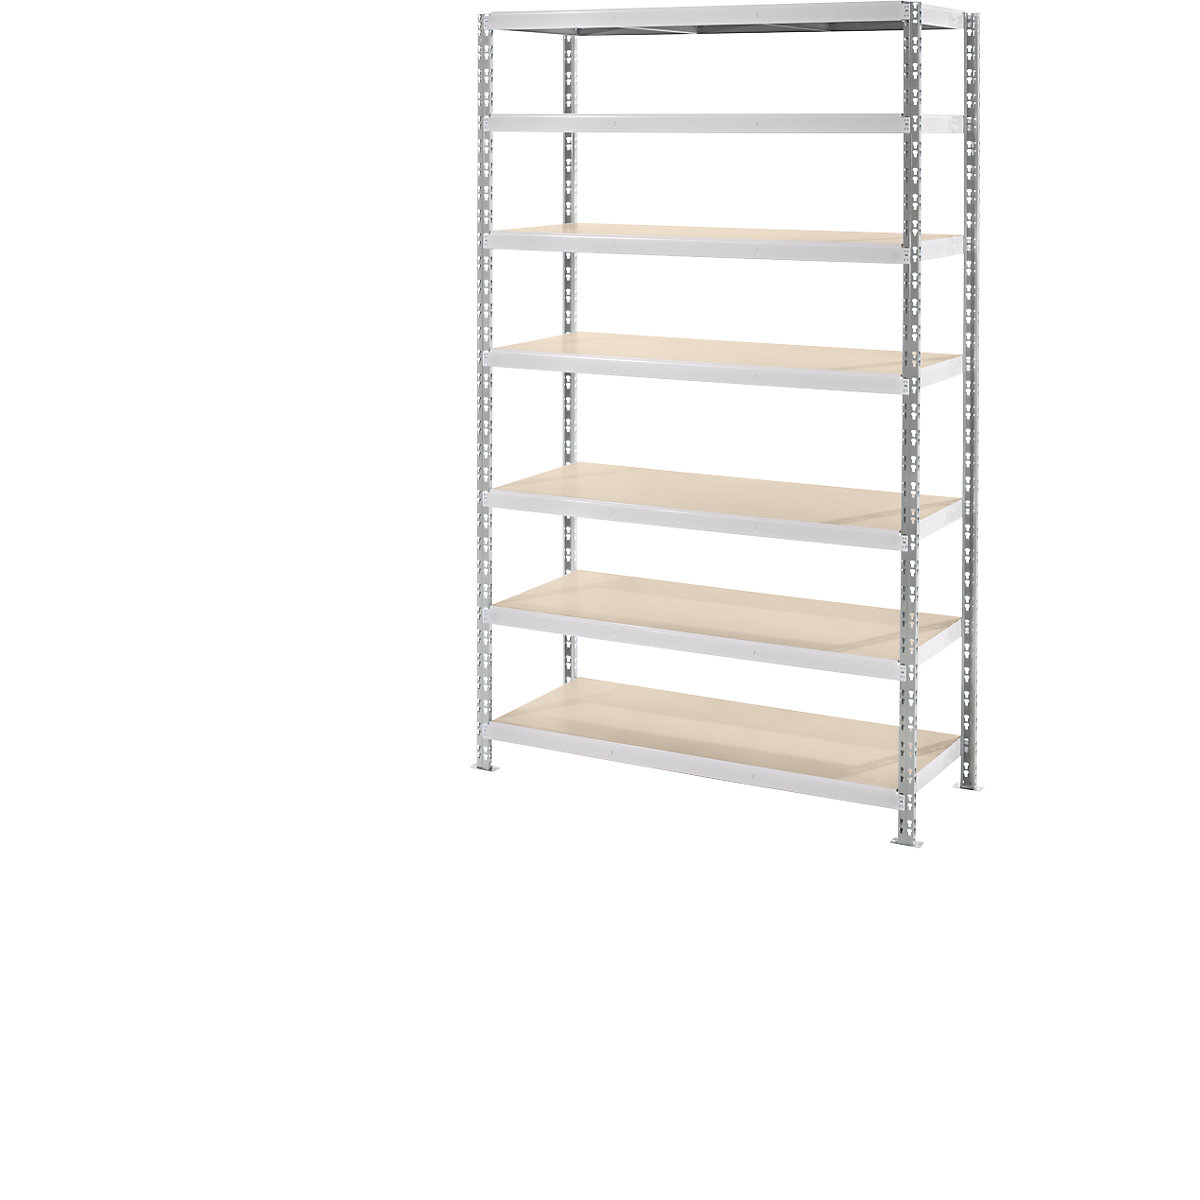 Wide span boltless shelf unit with moulded chipboard shelves, depth 700 mm, standard shelf unit, HxW 2522 x 1550 mm